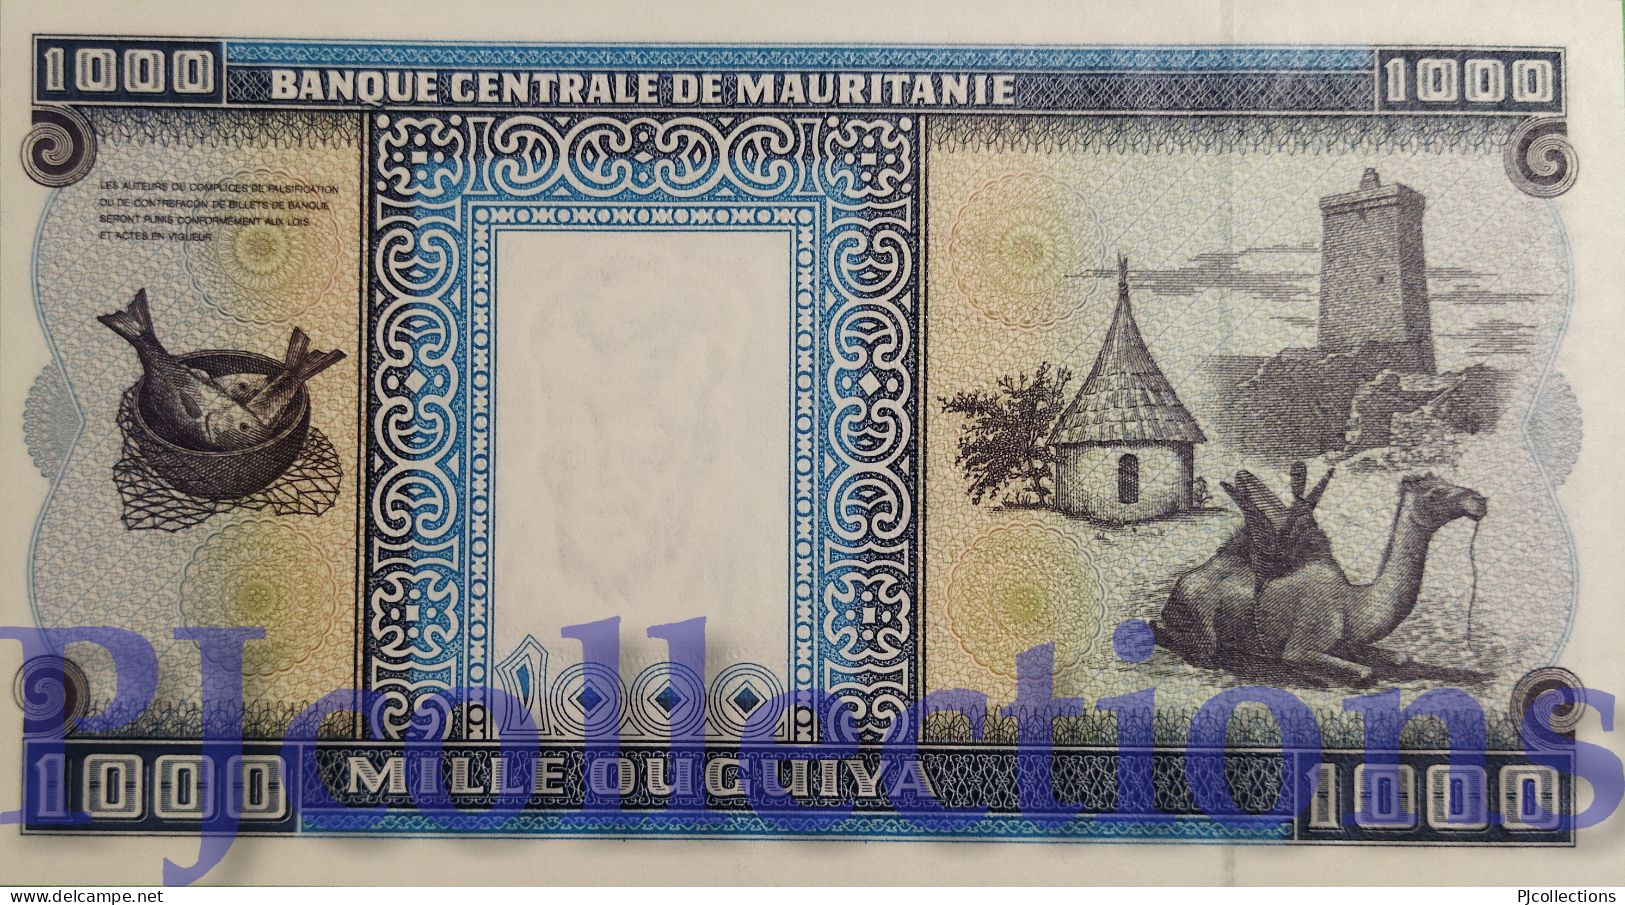 MAURITANIA 1000 OUGUIYA 1999 PICK 9a UNC - Mauritanië